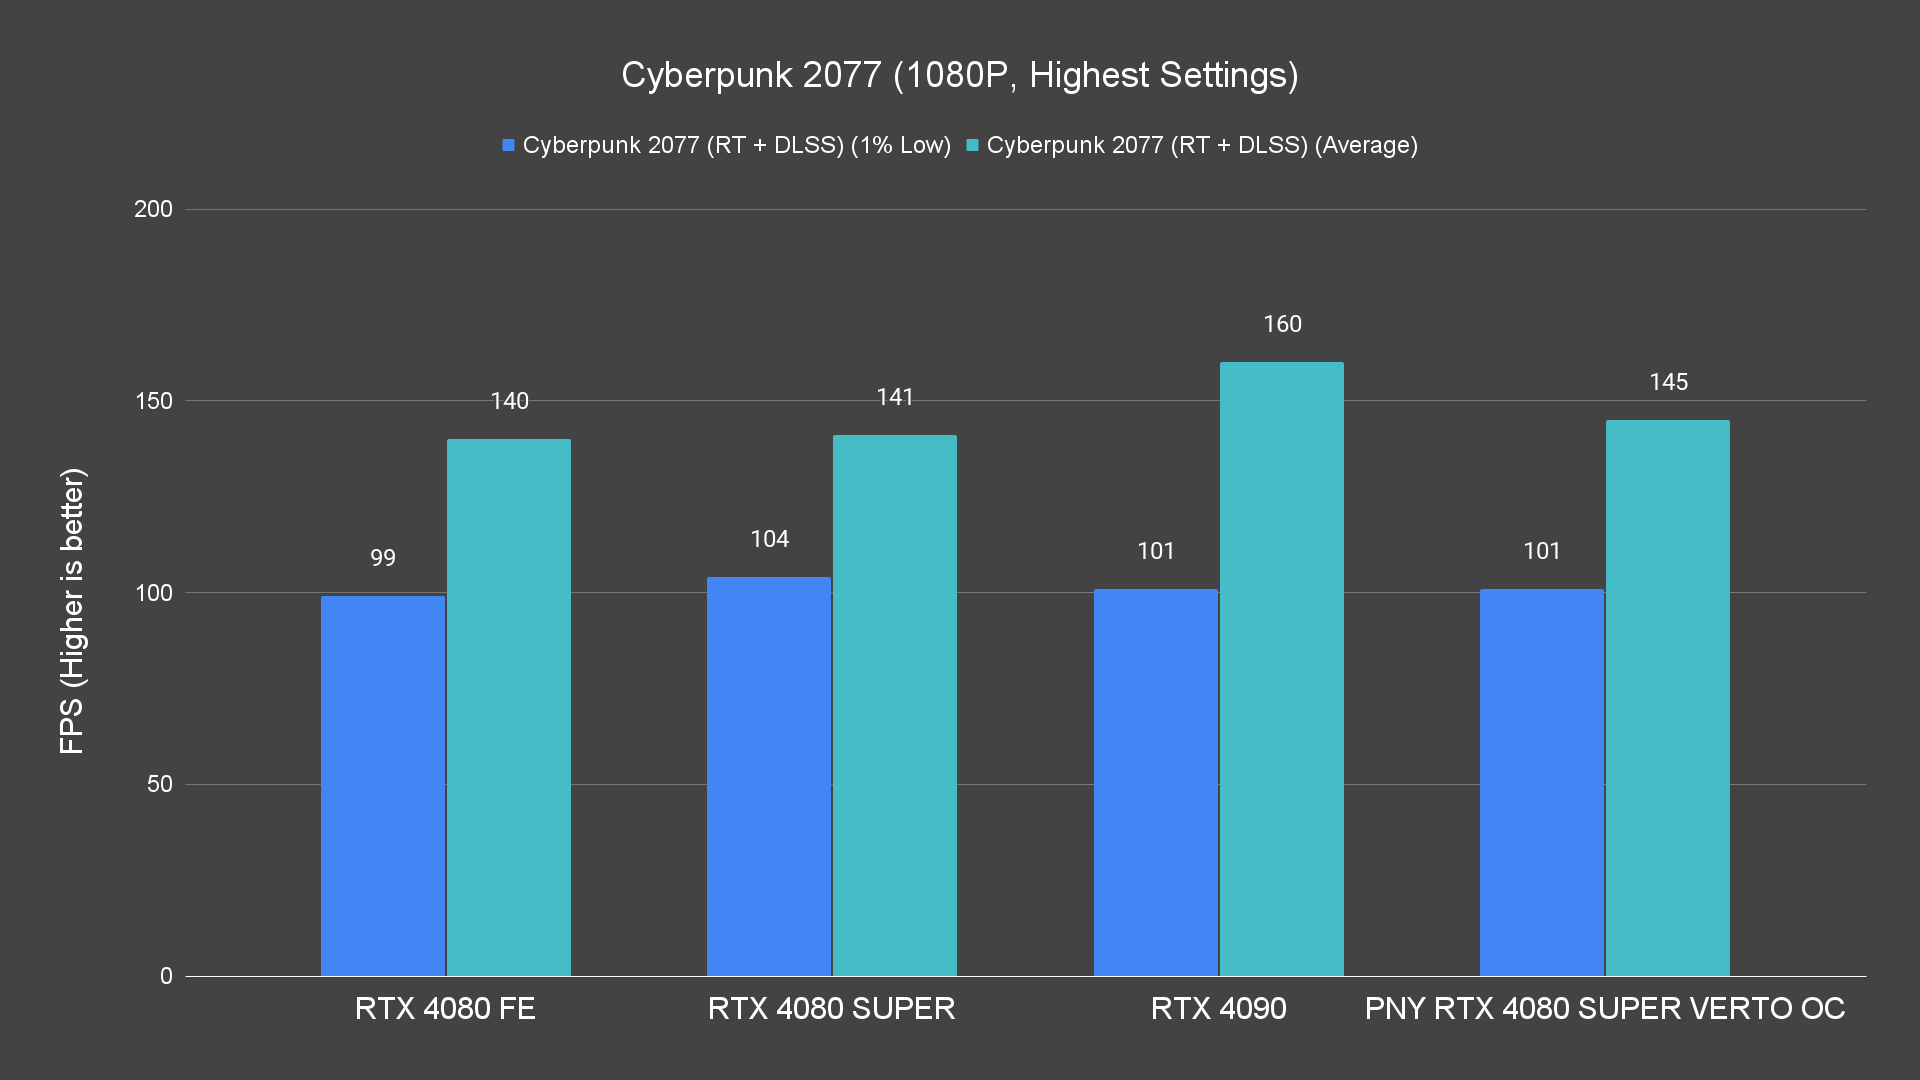 Cyberpunk 2077 (1080P, Highest Settings) (1)